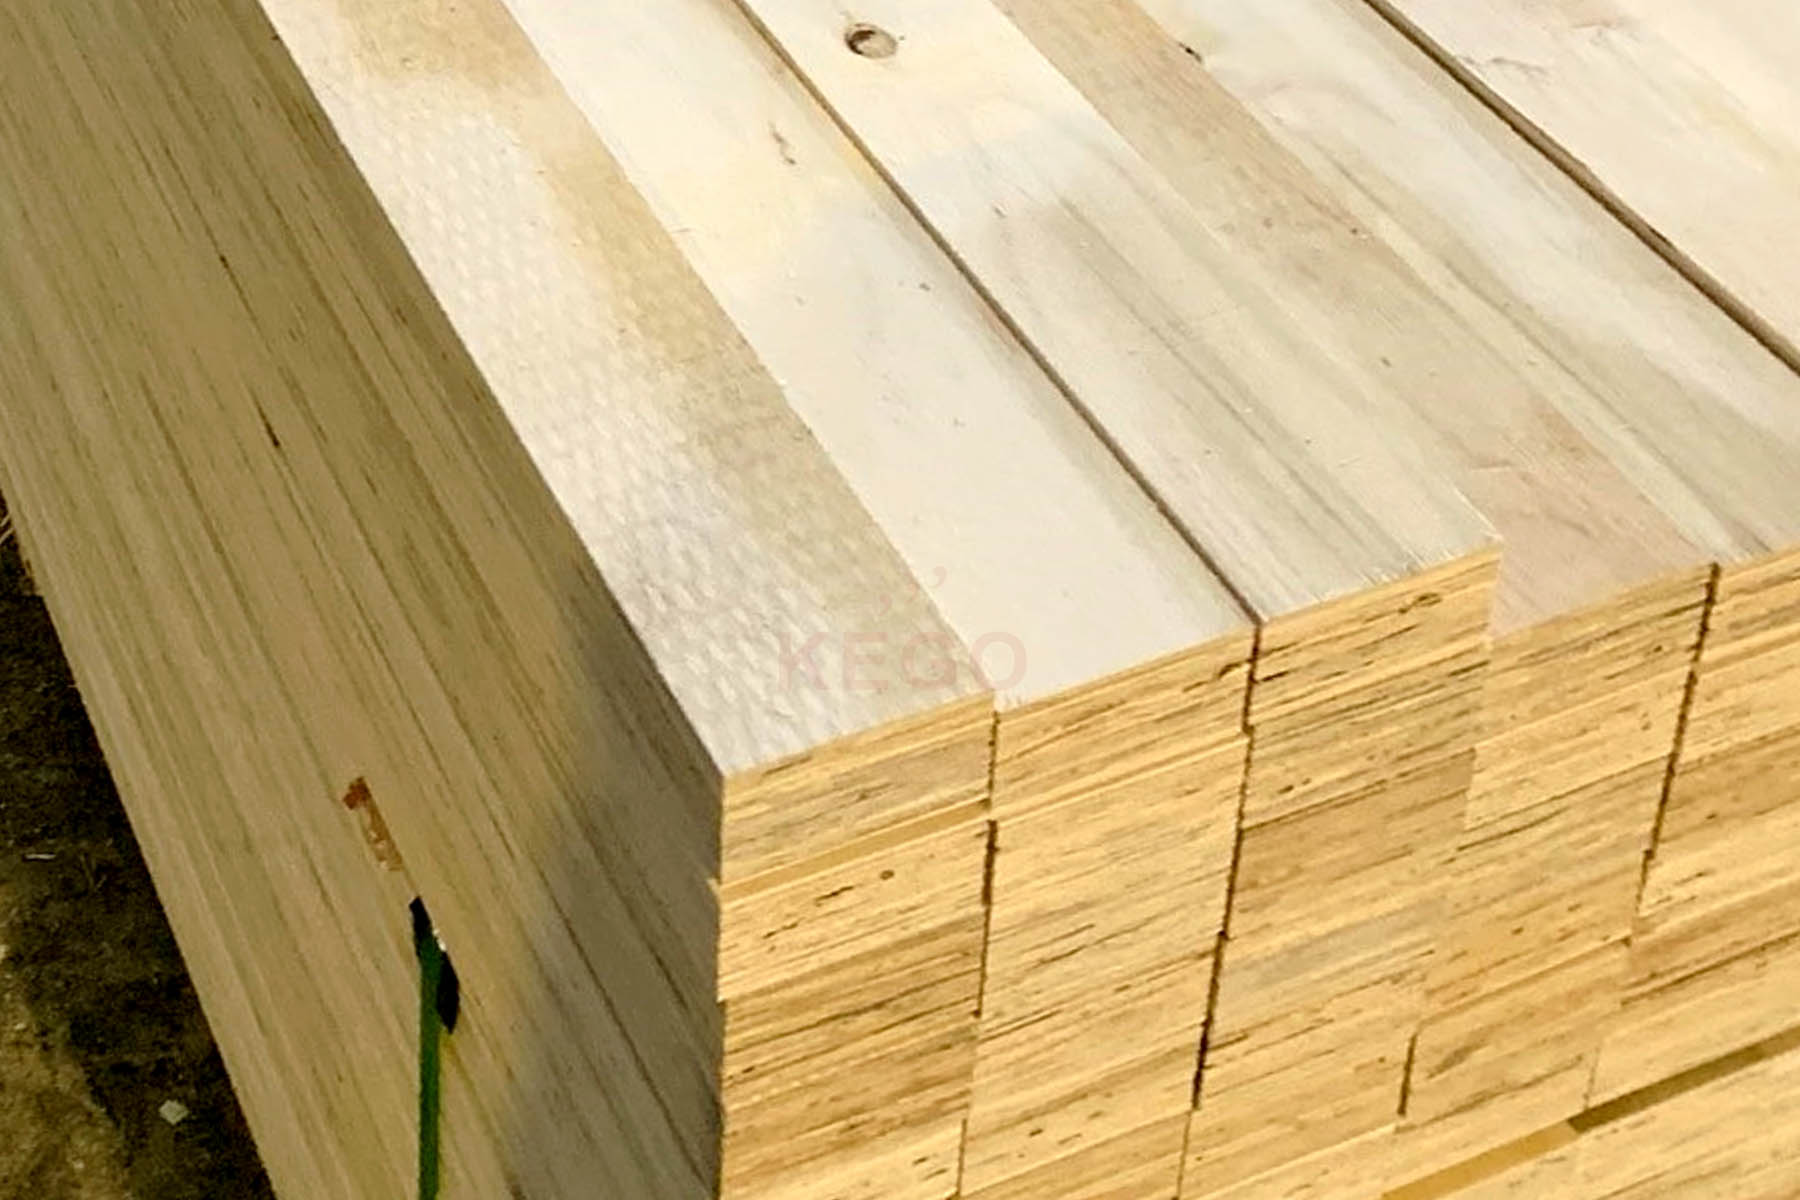 https://kego.com.vn/wp-content/uploads/2015/09/laminated-veneer-lumber-lvl-kego-3.jpg